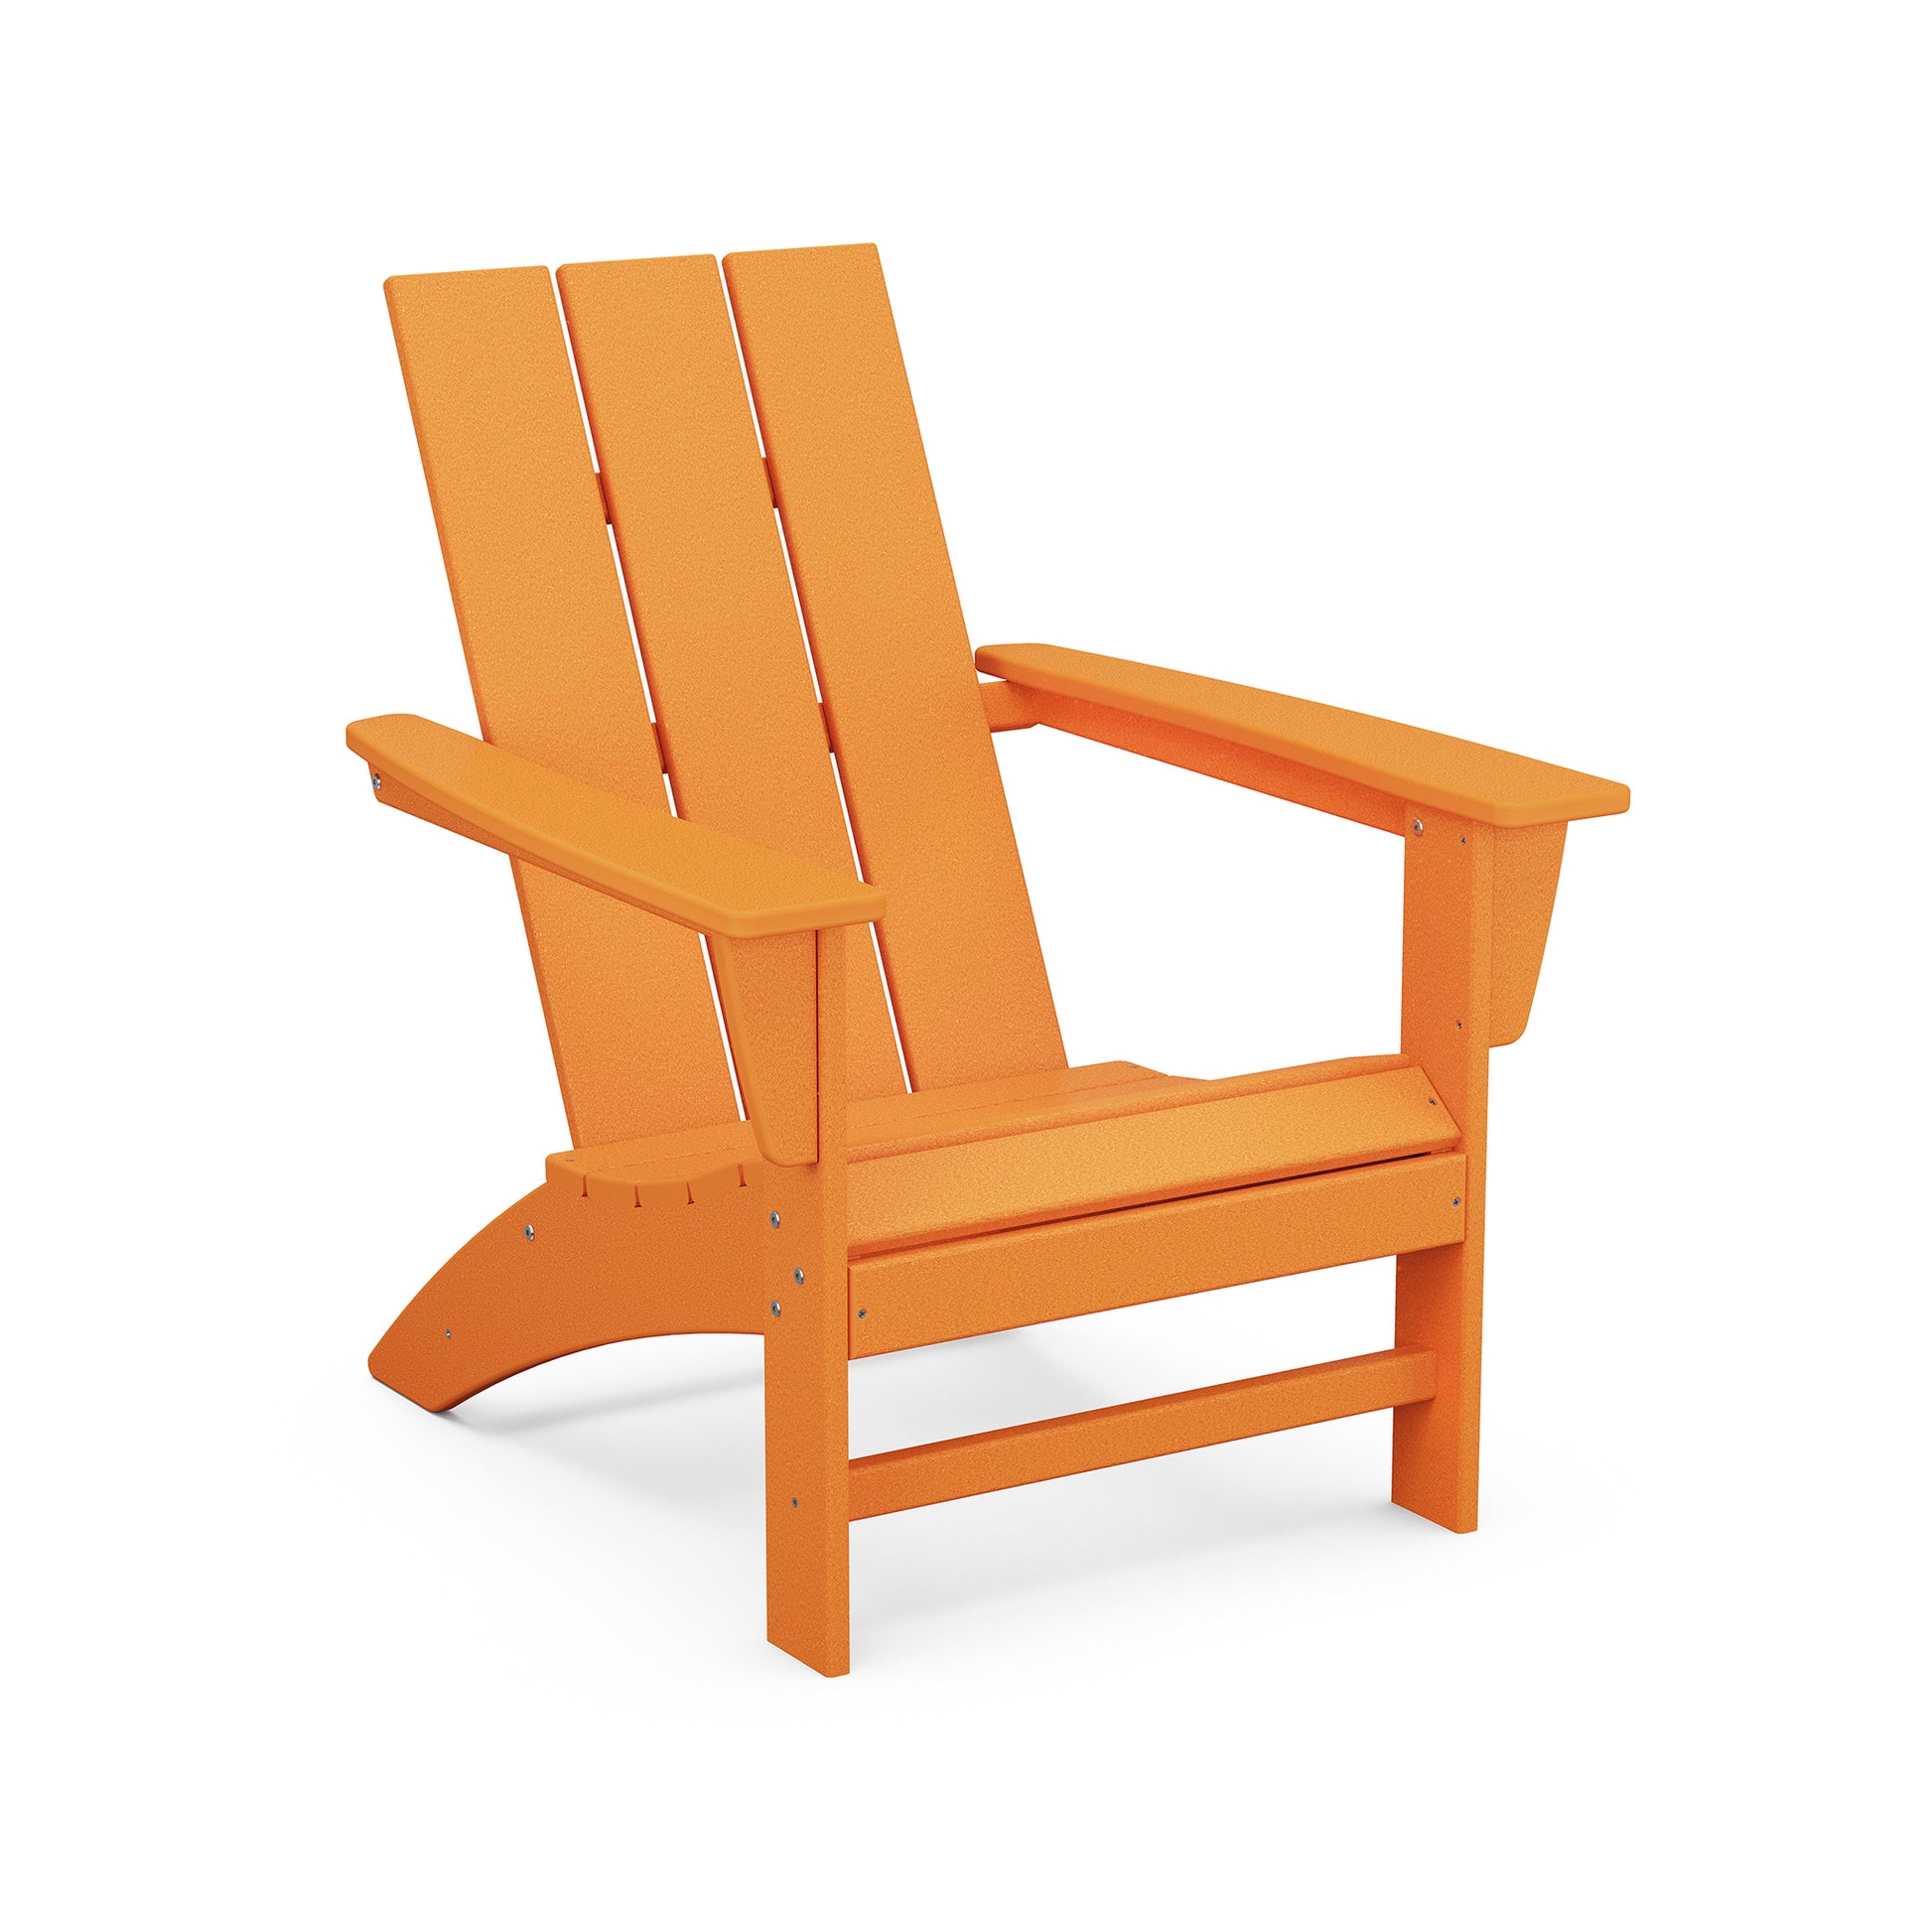 An orange adirondack chair on a white background.